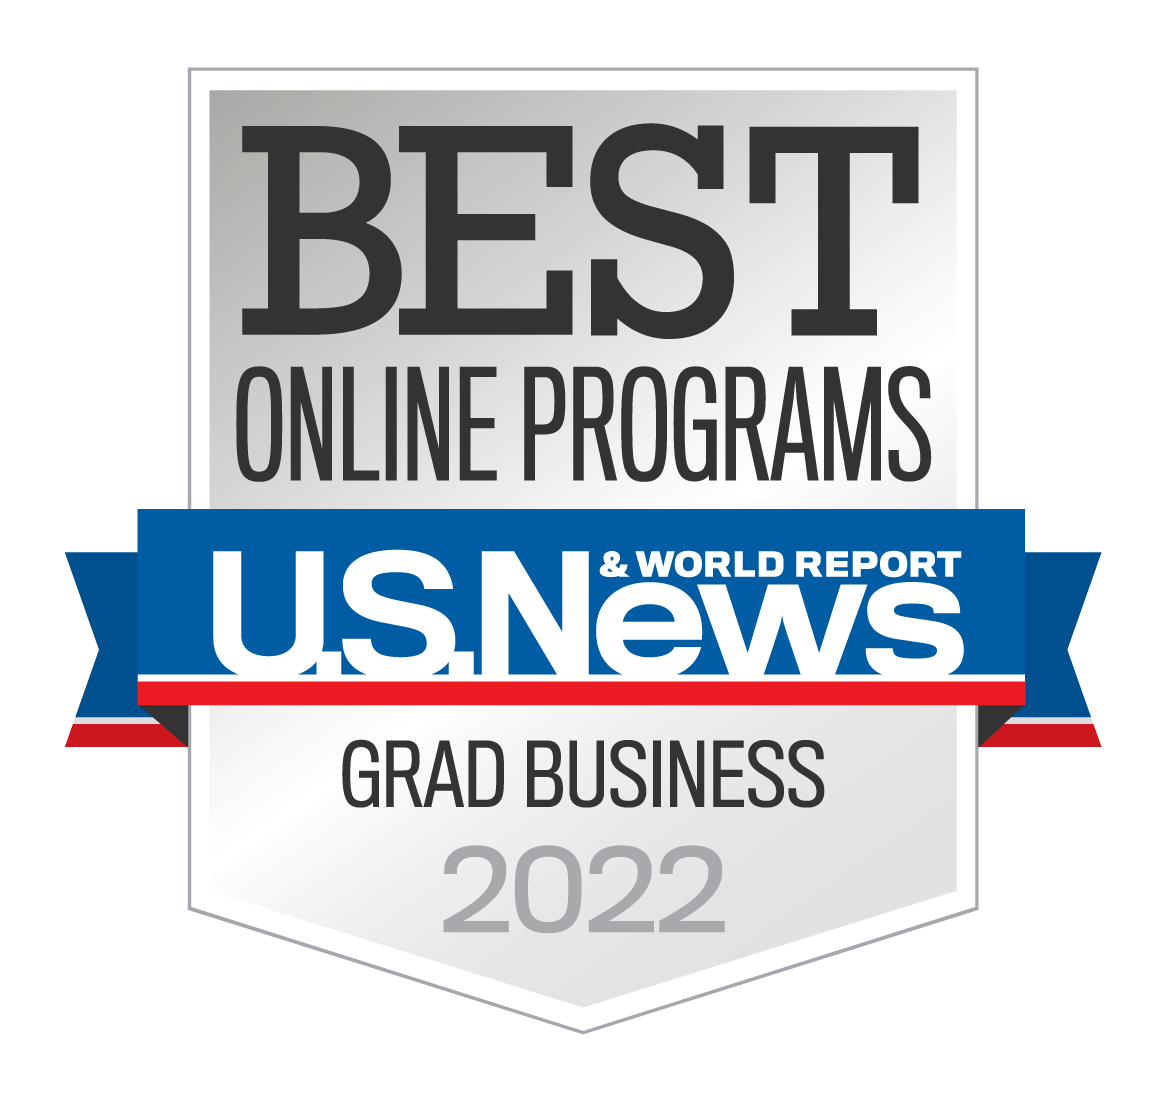 Best Online Programs U.S. News & World Reports Graduate Business